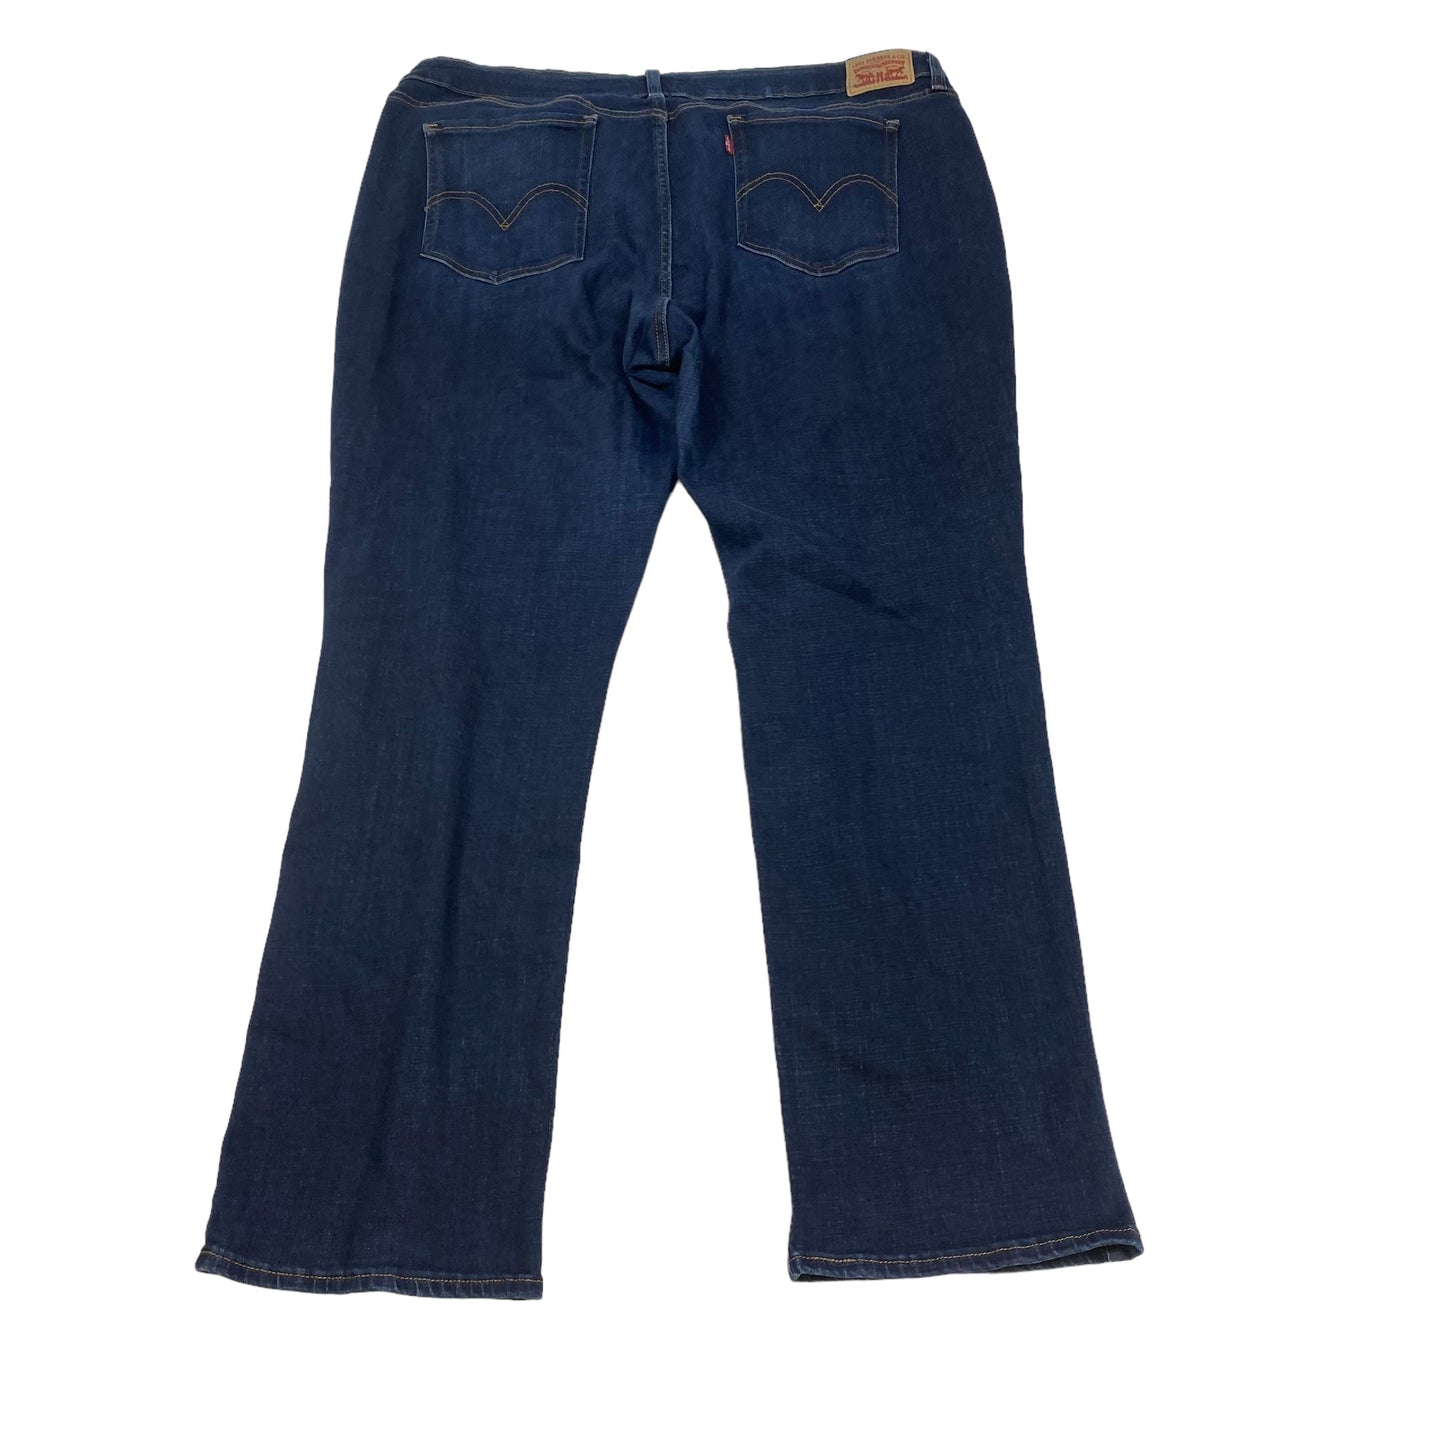 Blue Denim Jeans Straight Levis, Size 24w